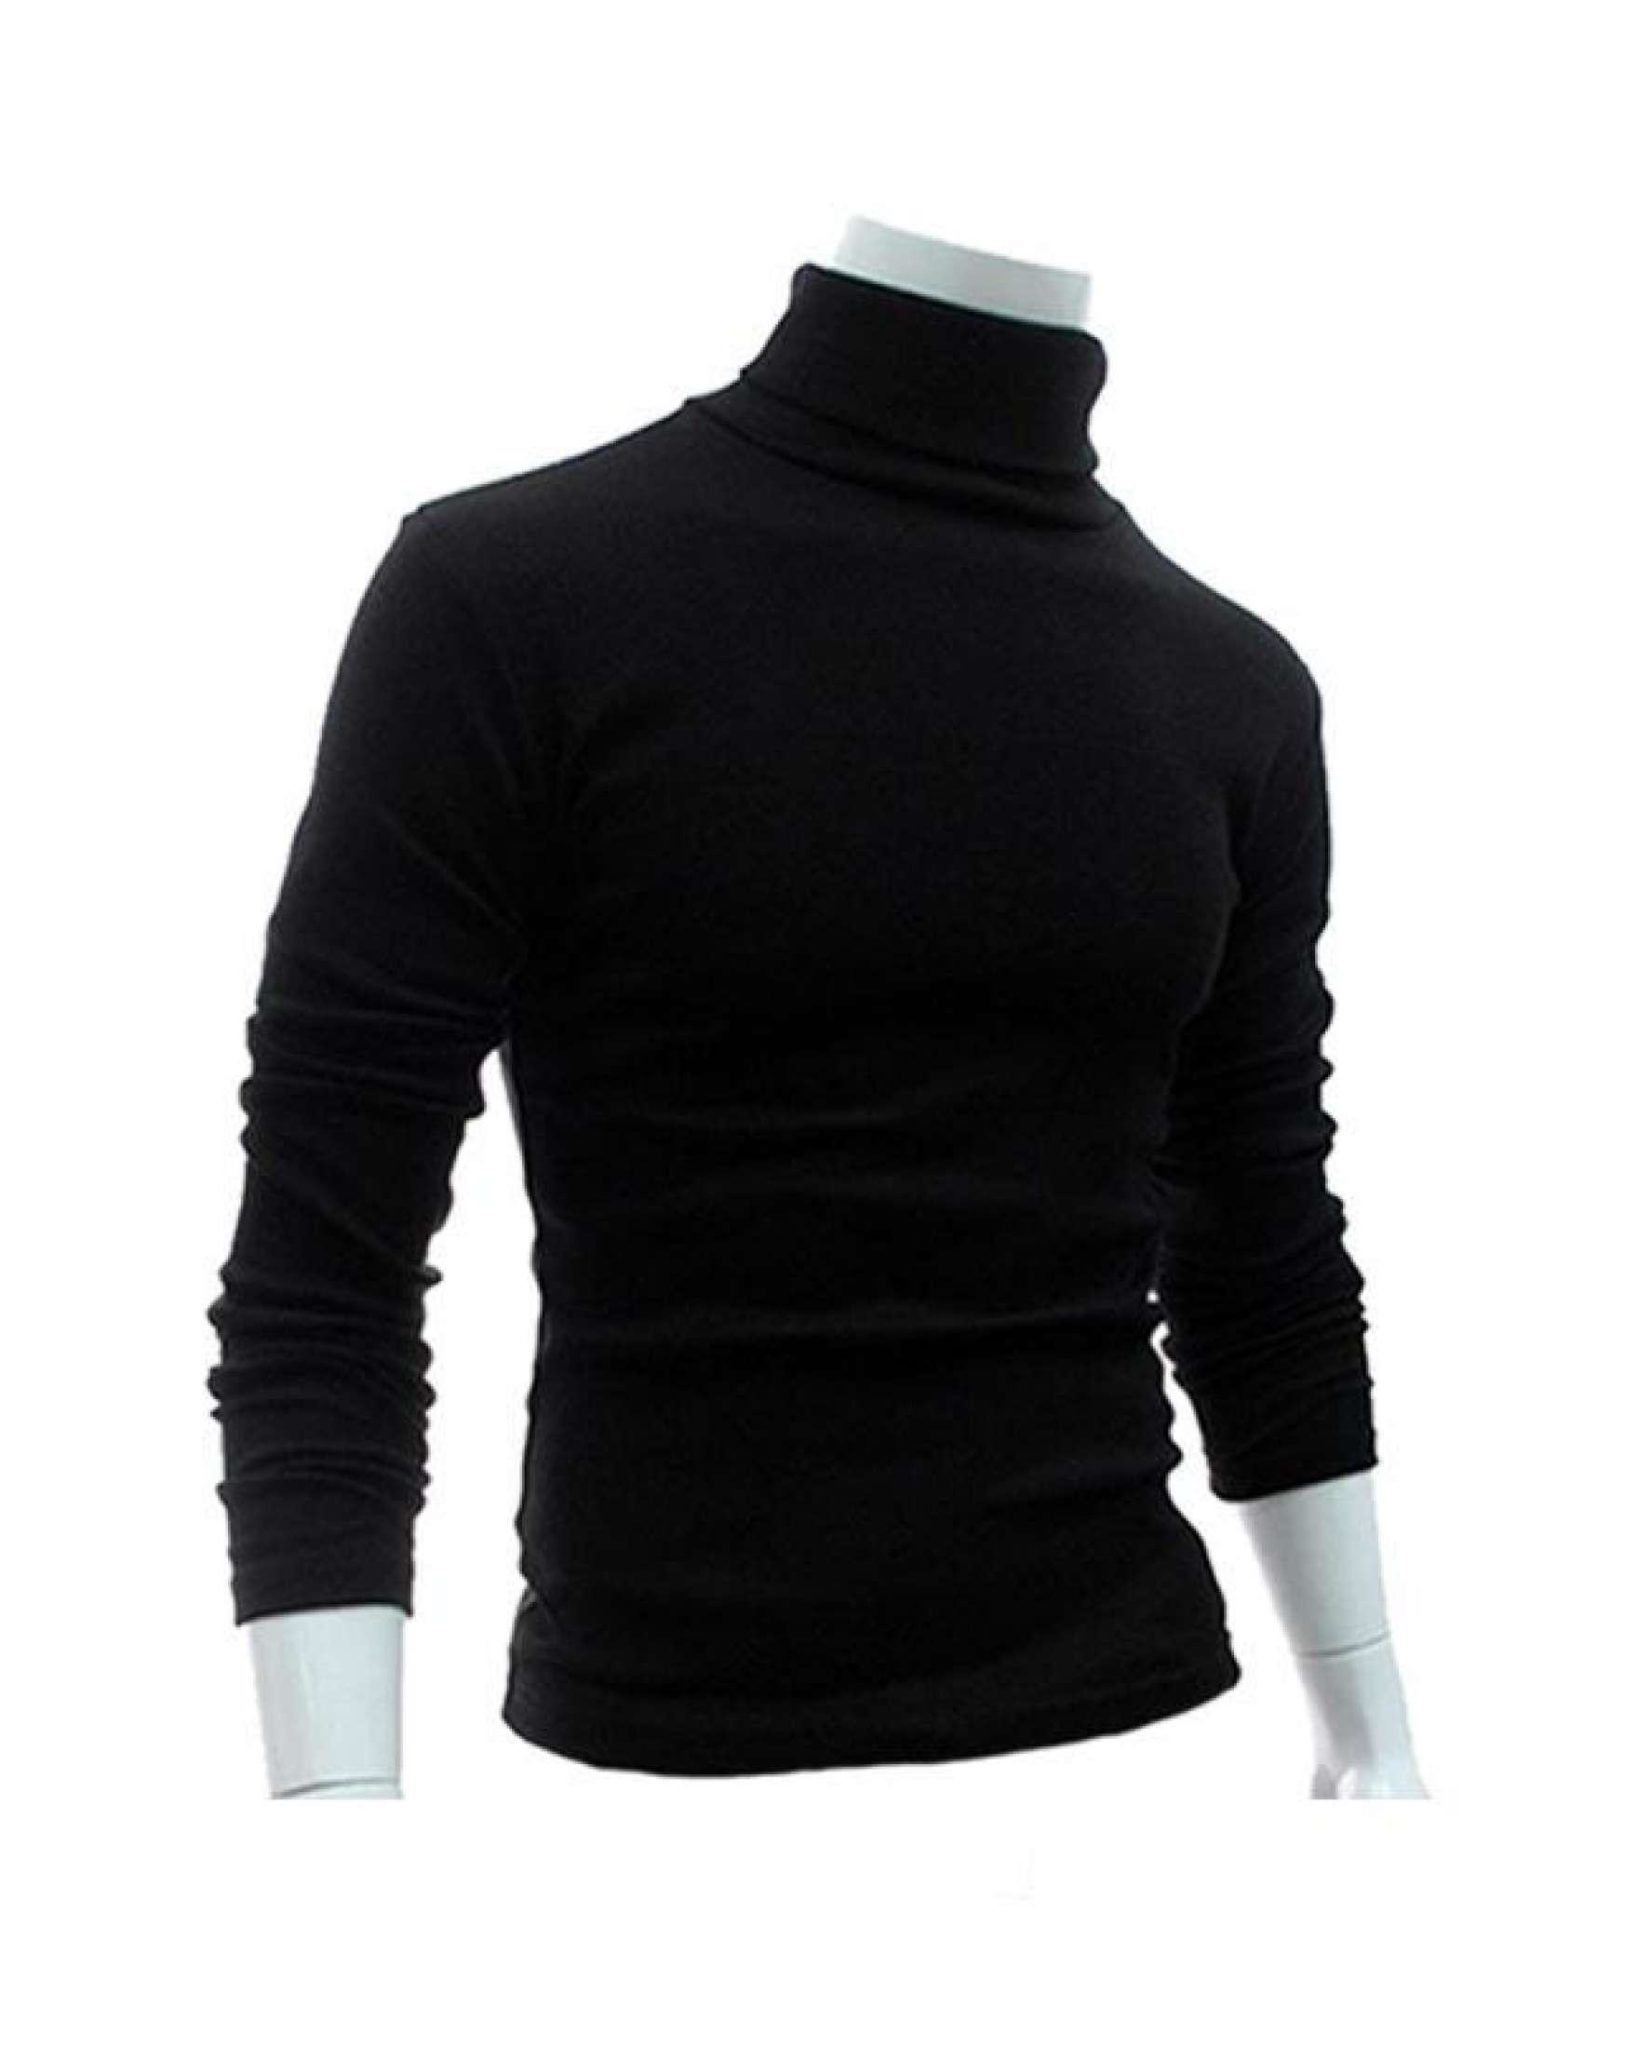 High Neck Full Sleeves For Men Large Size - Online Home Shopping in ...